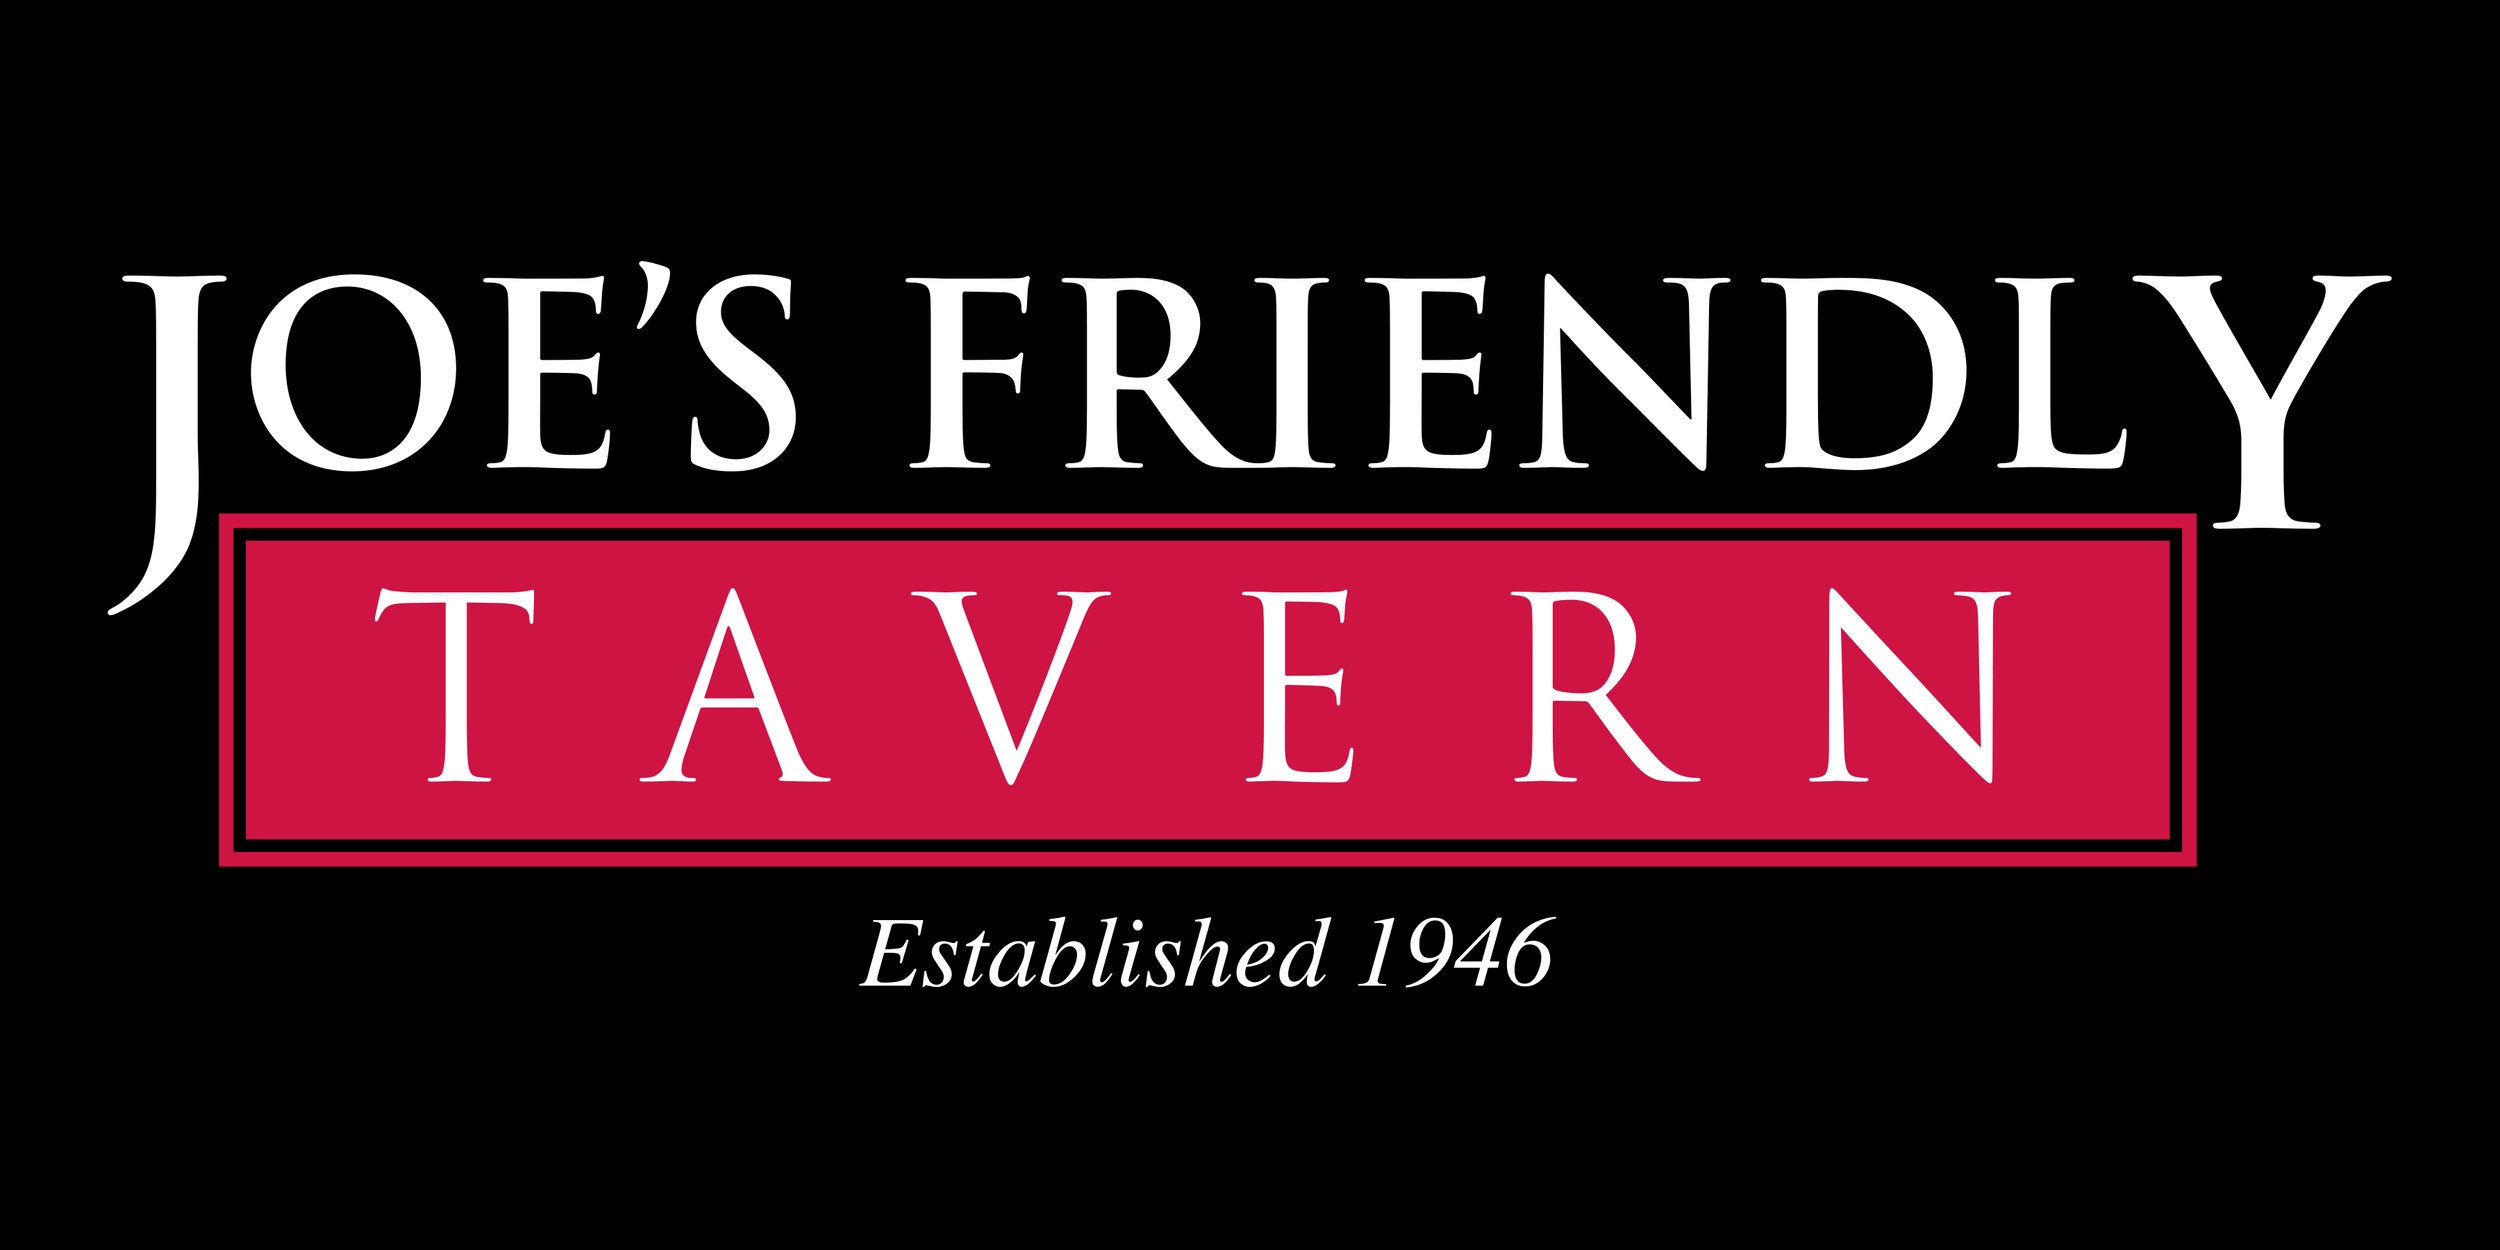 Joe's Friendly Tavern